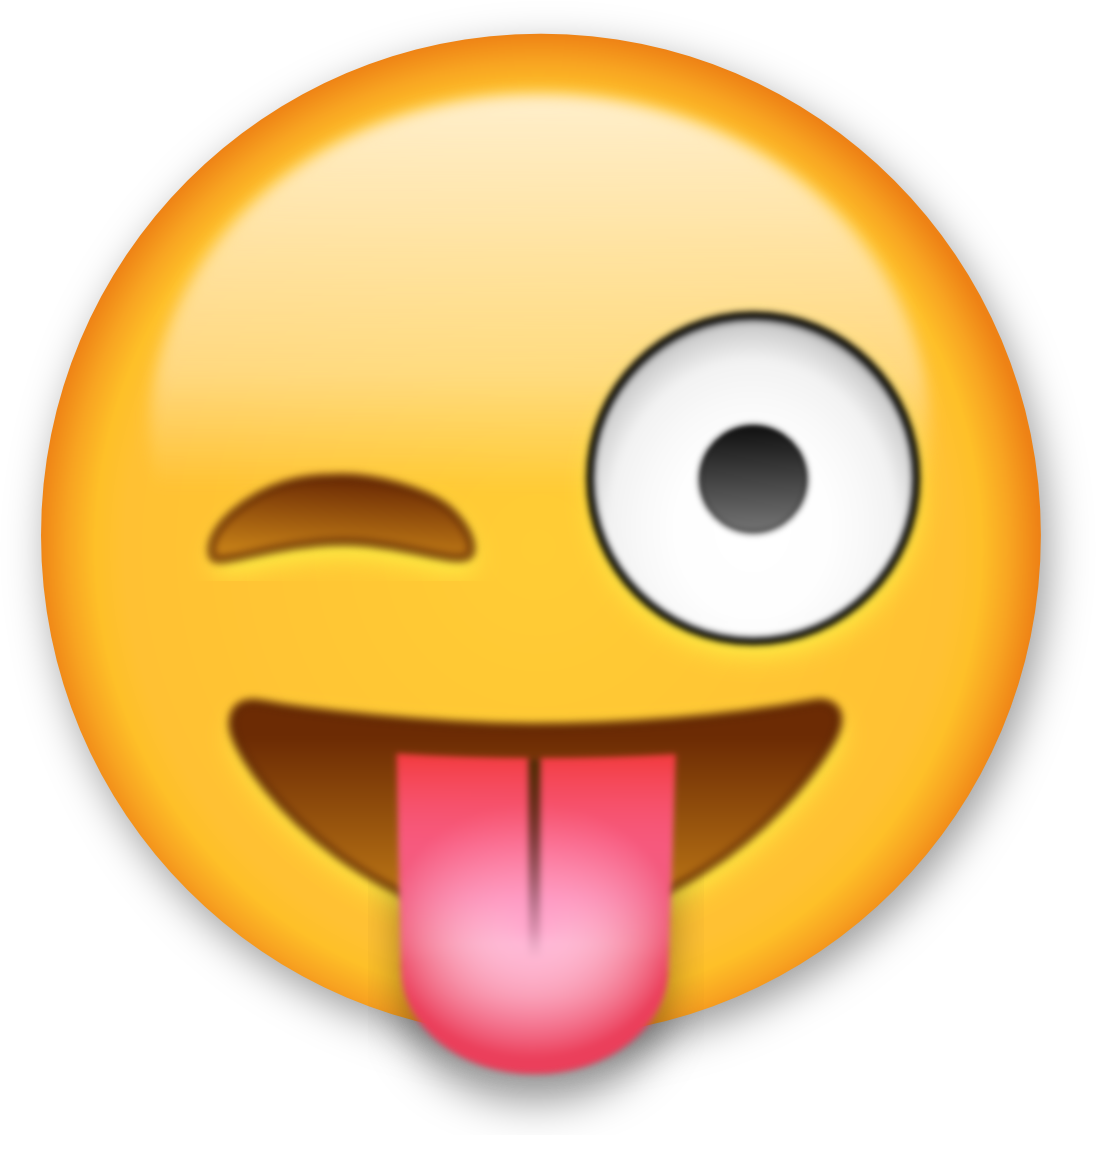 Image emoji cliparts utsgaq. Clipart ruler face